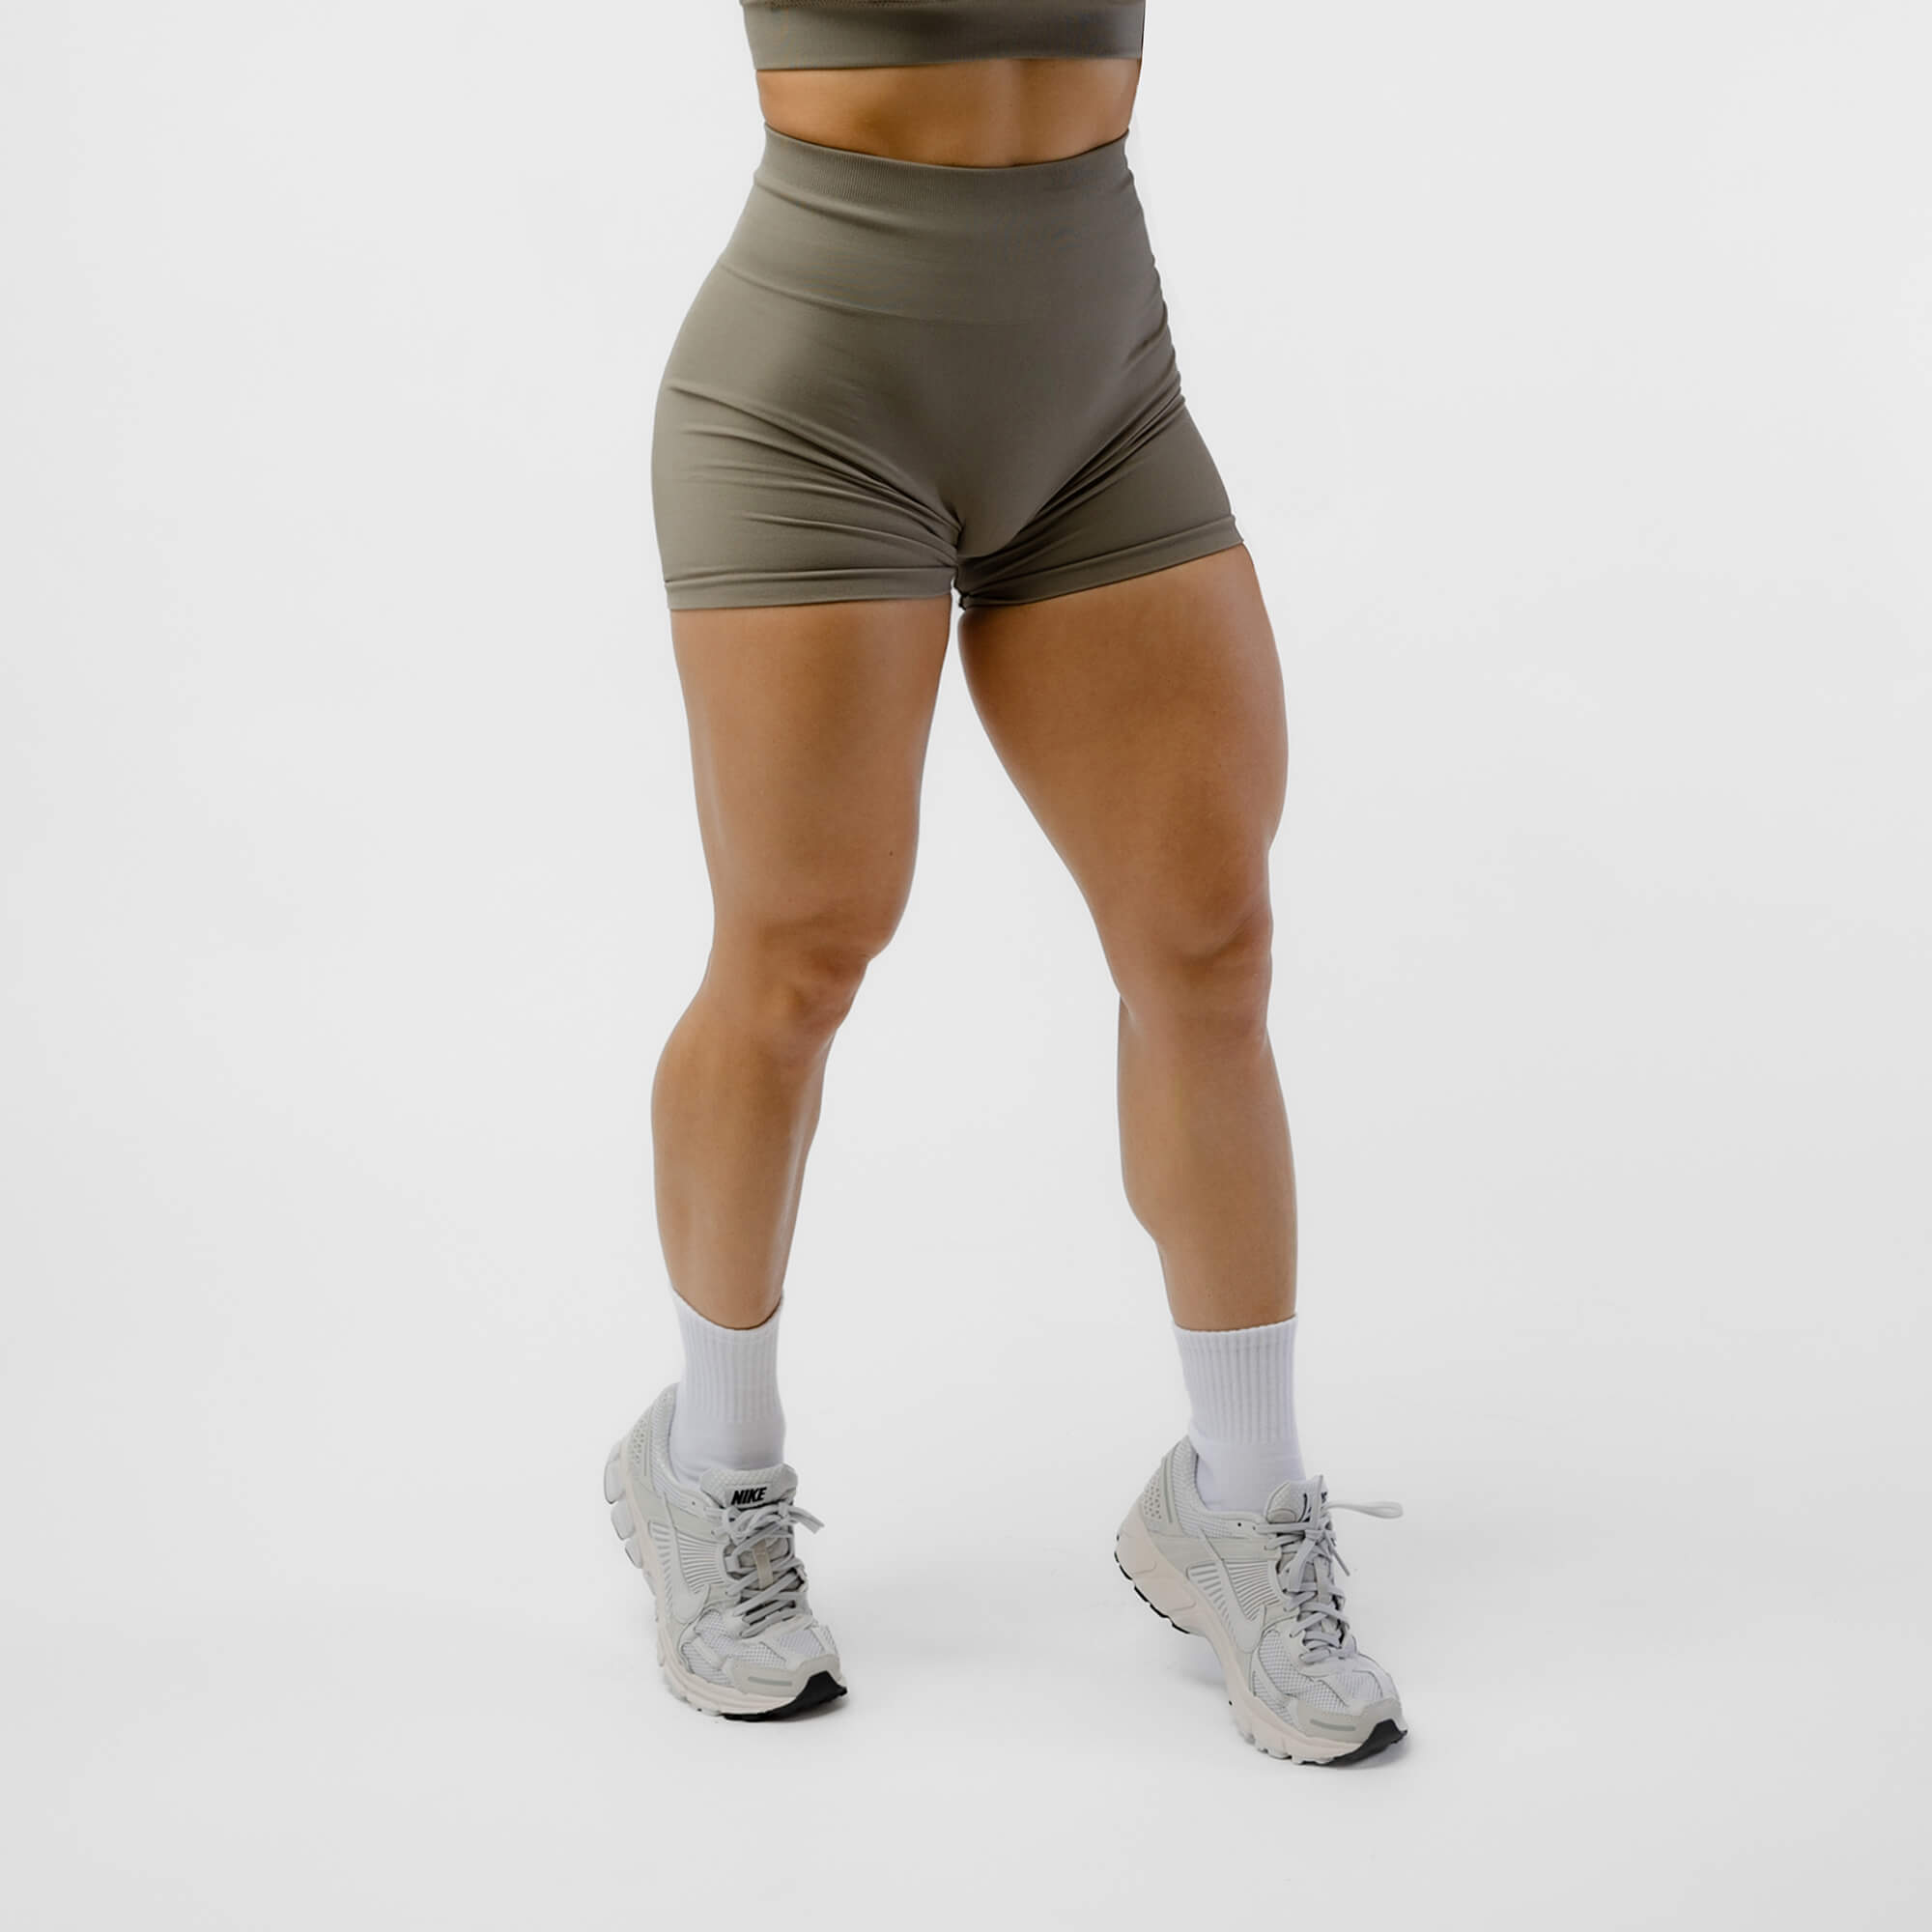 Shop Women's Gym Shorts